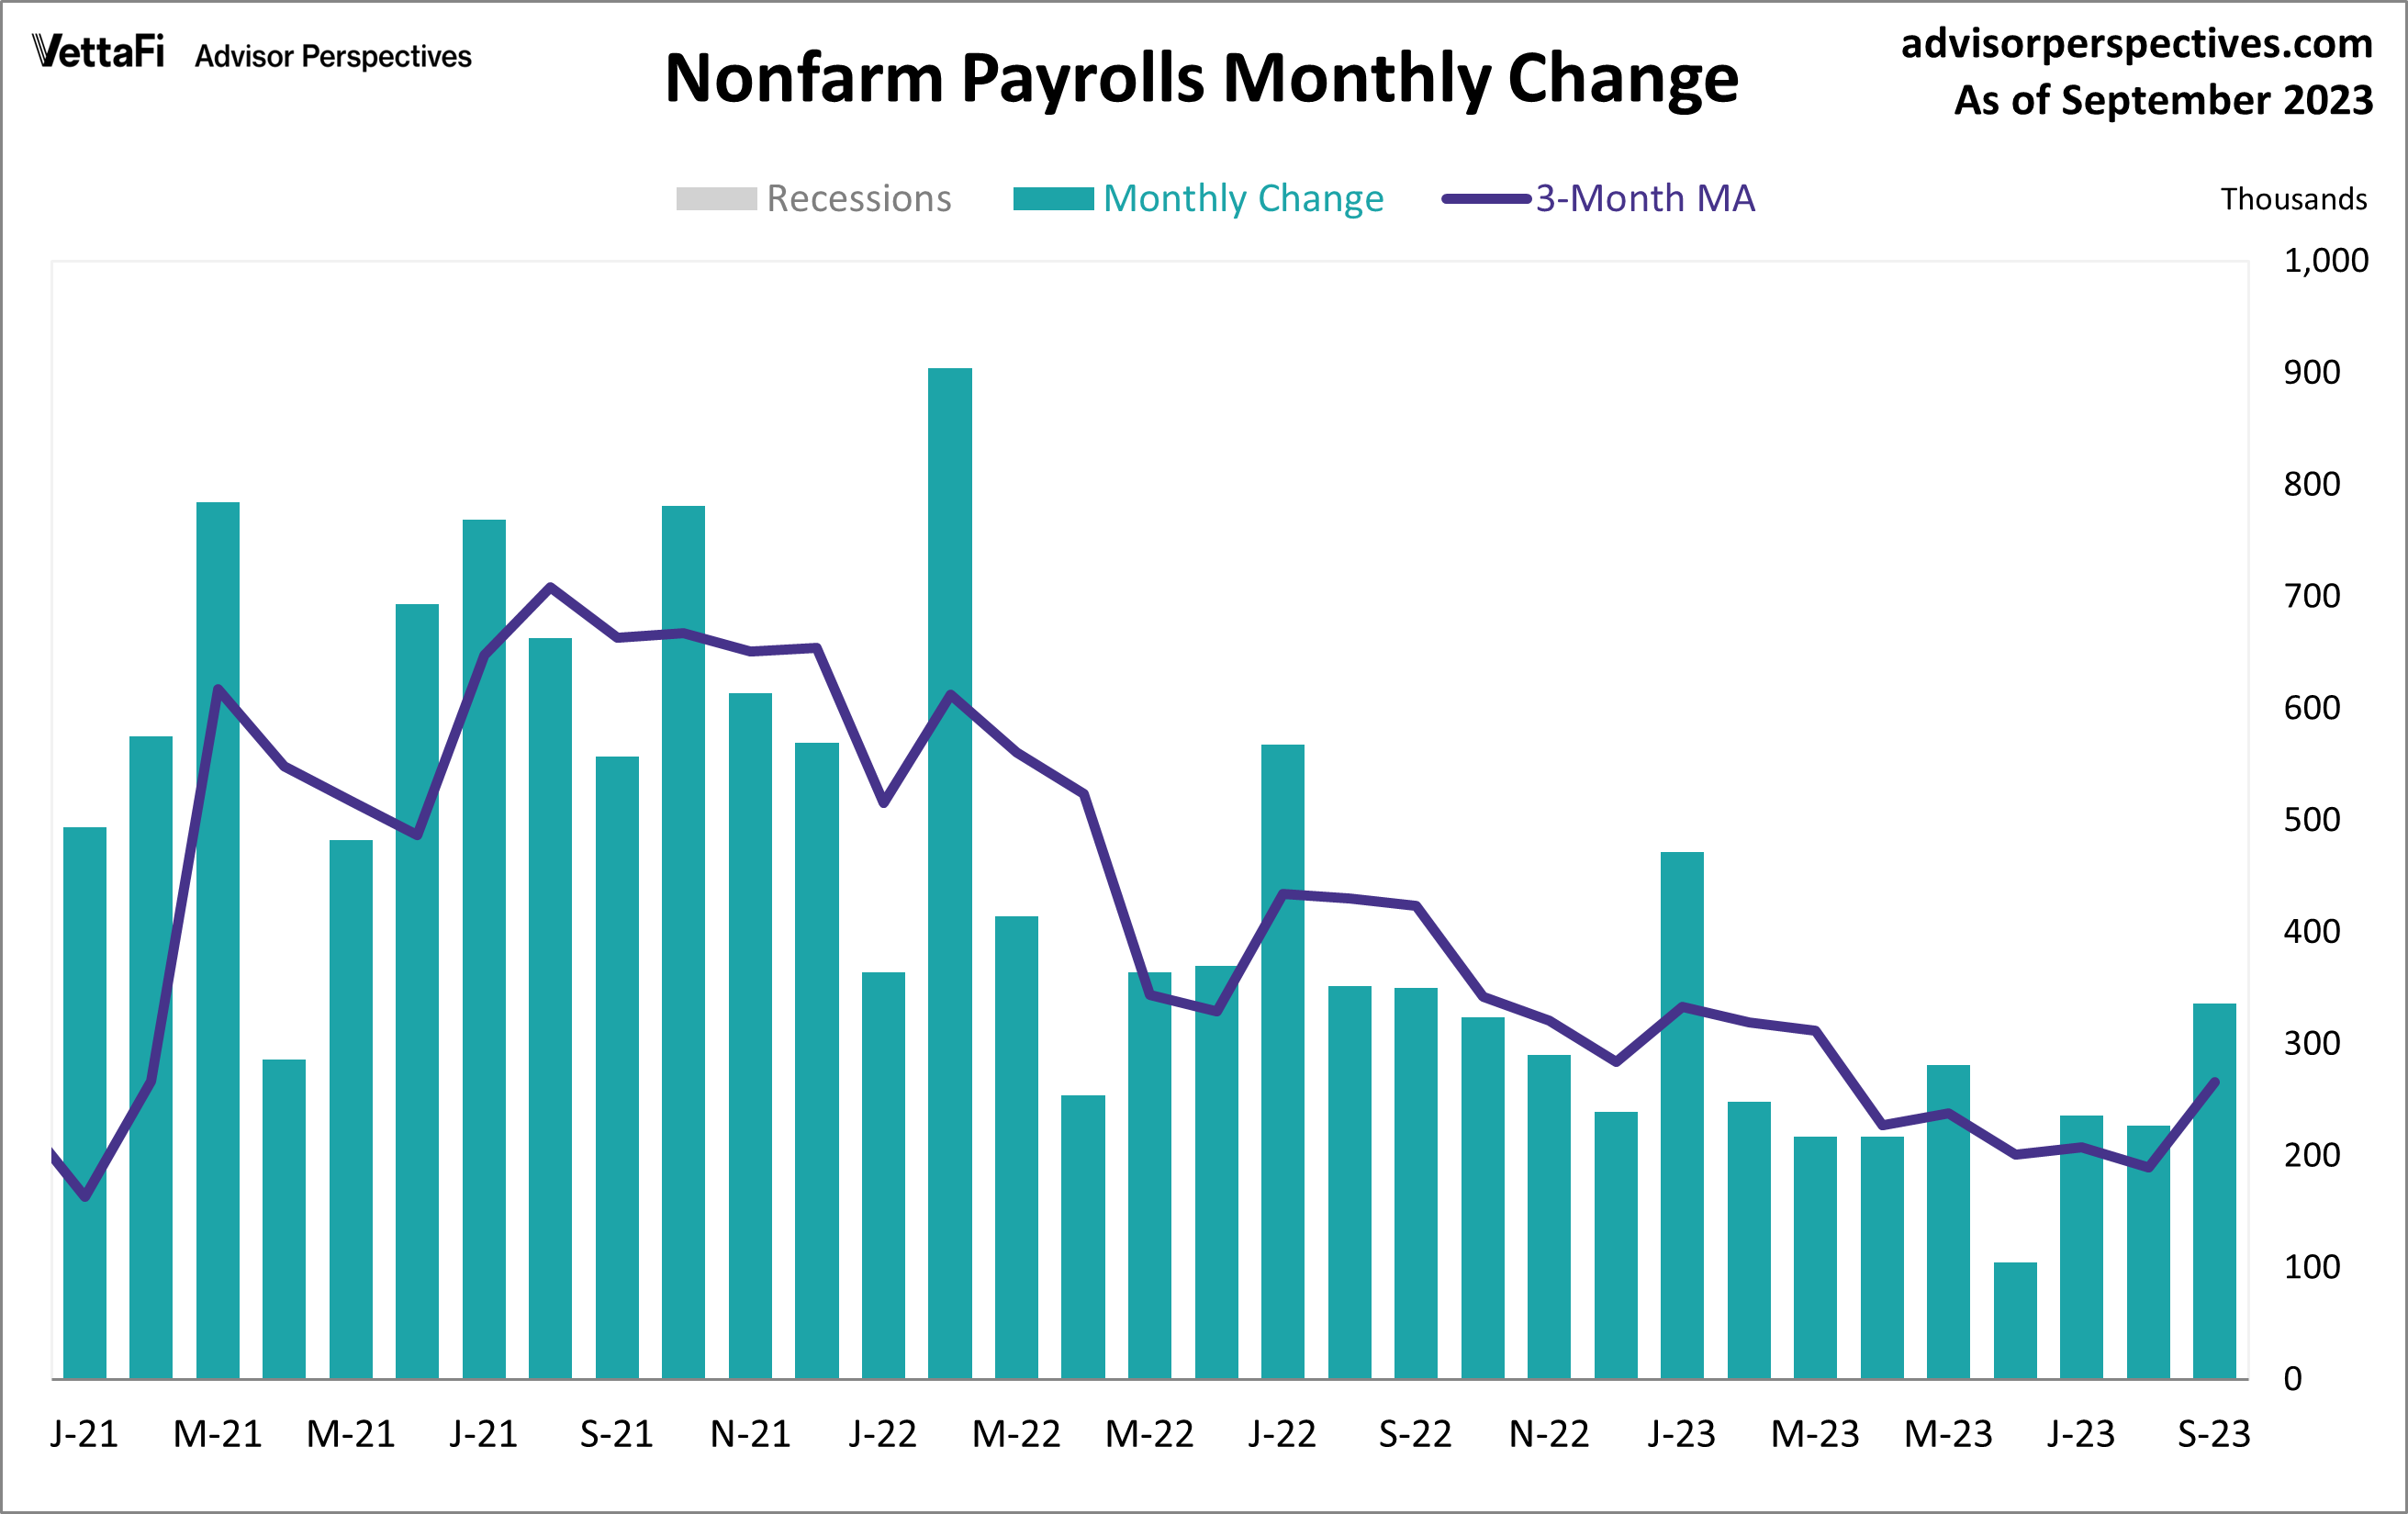 Nonfarm Payrolls Monthly Change